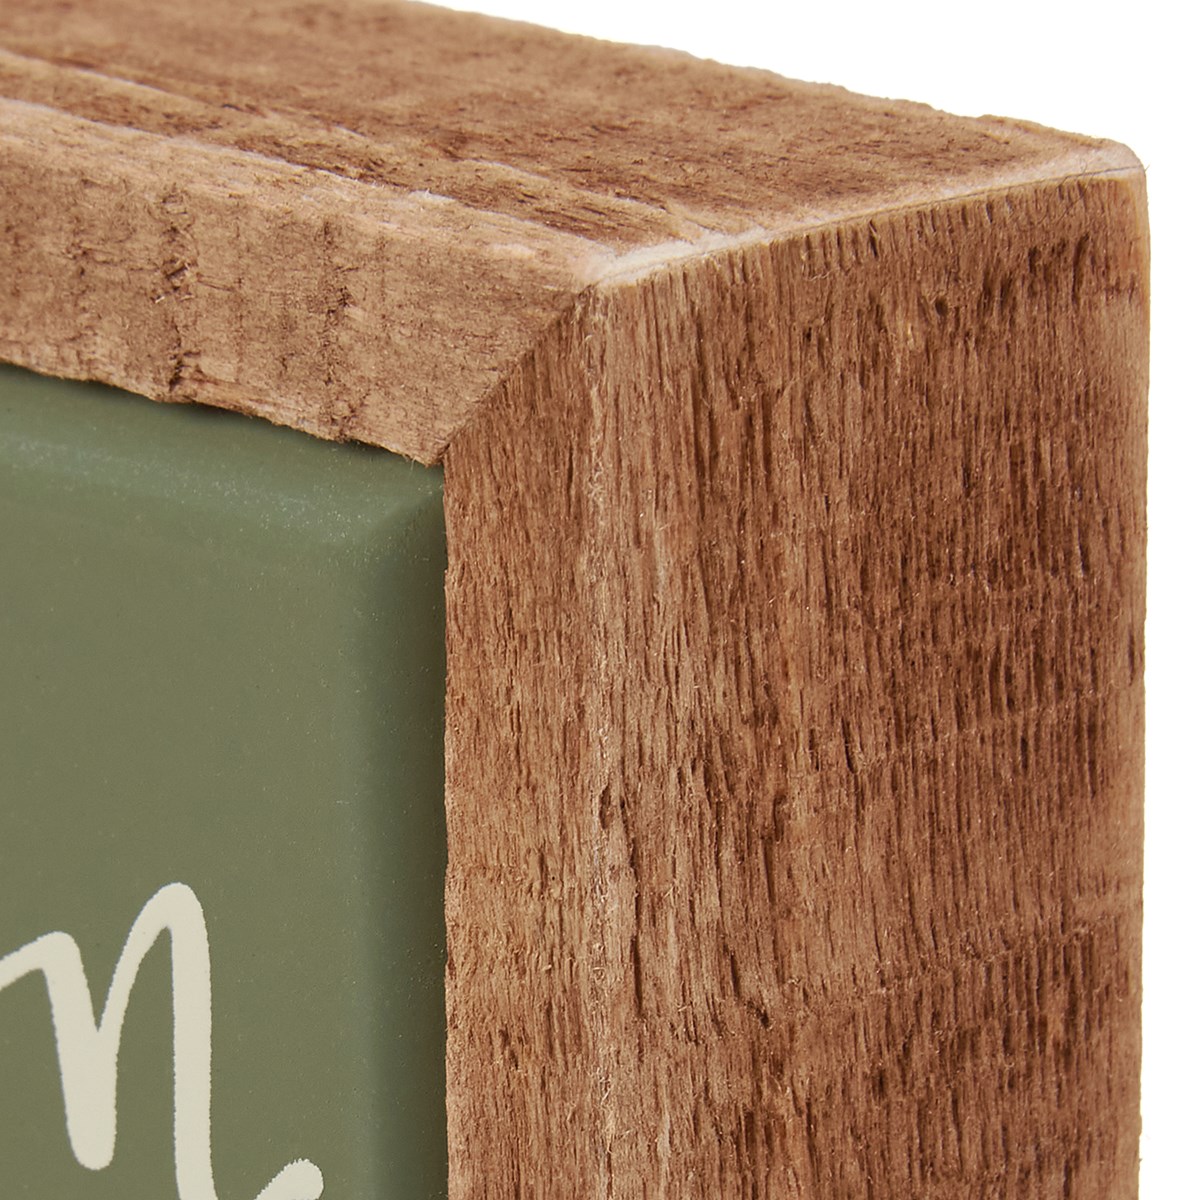 'Tis The Season To Snuggle Box Sign Mini - Wood